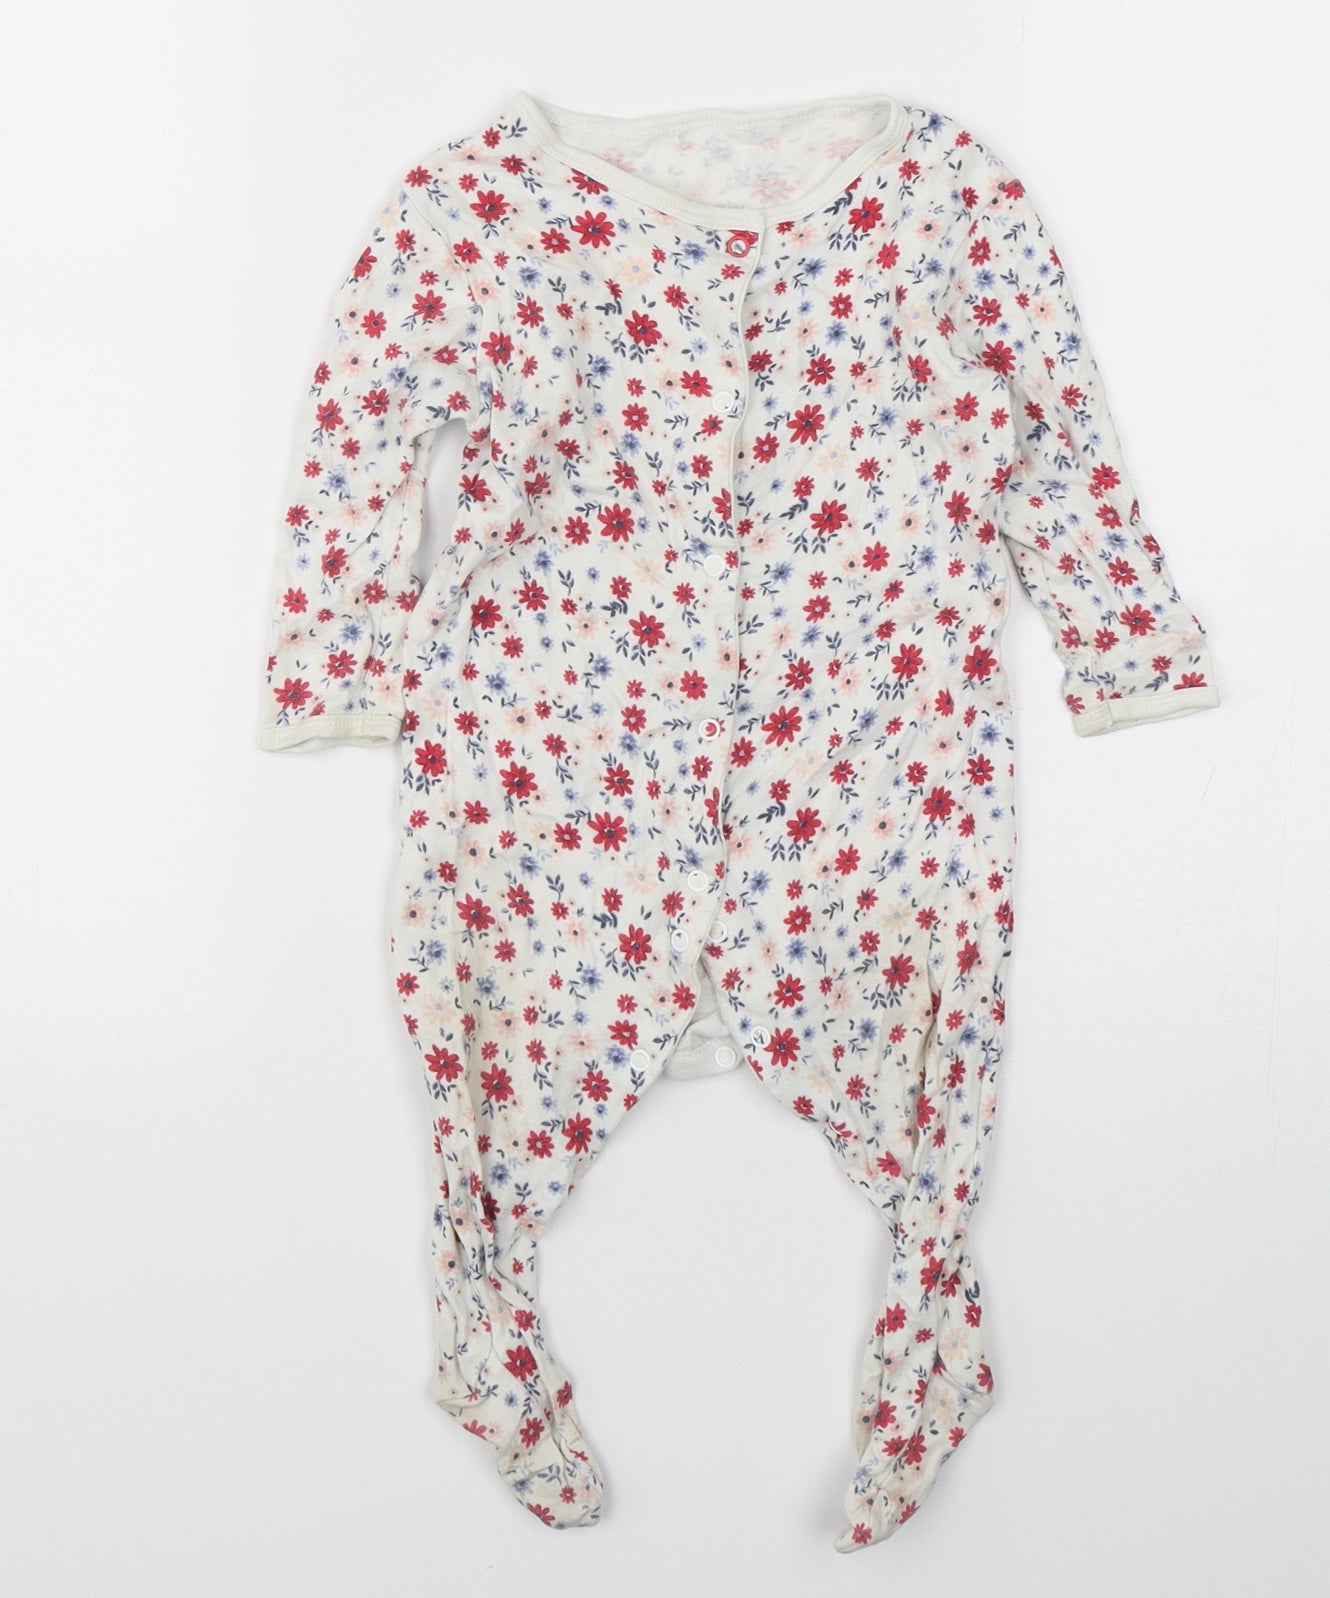 Primark Girls Multicoloured Floral Cotton Babygrow One-Piece Size 6-9 Months  Snap